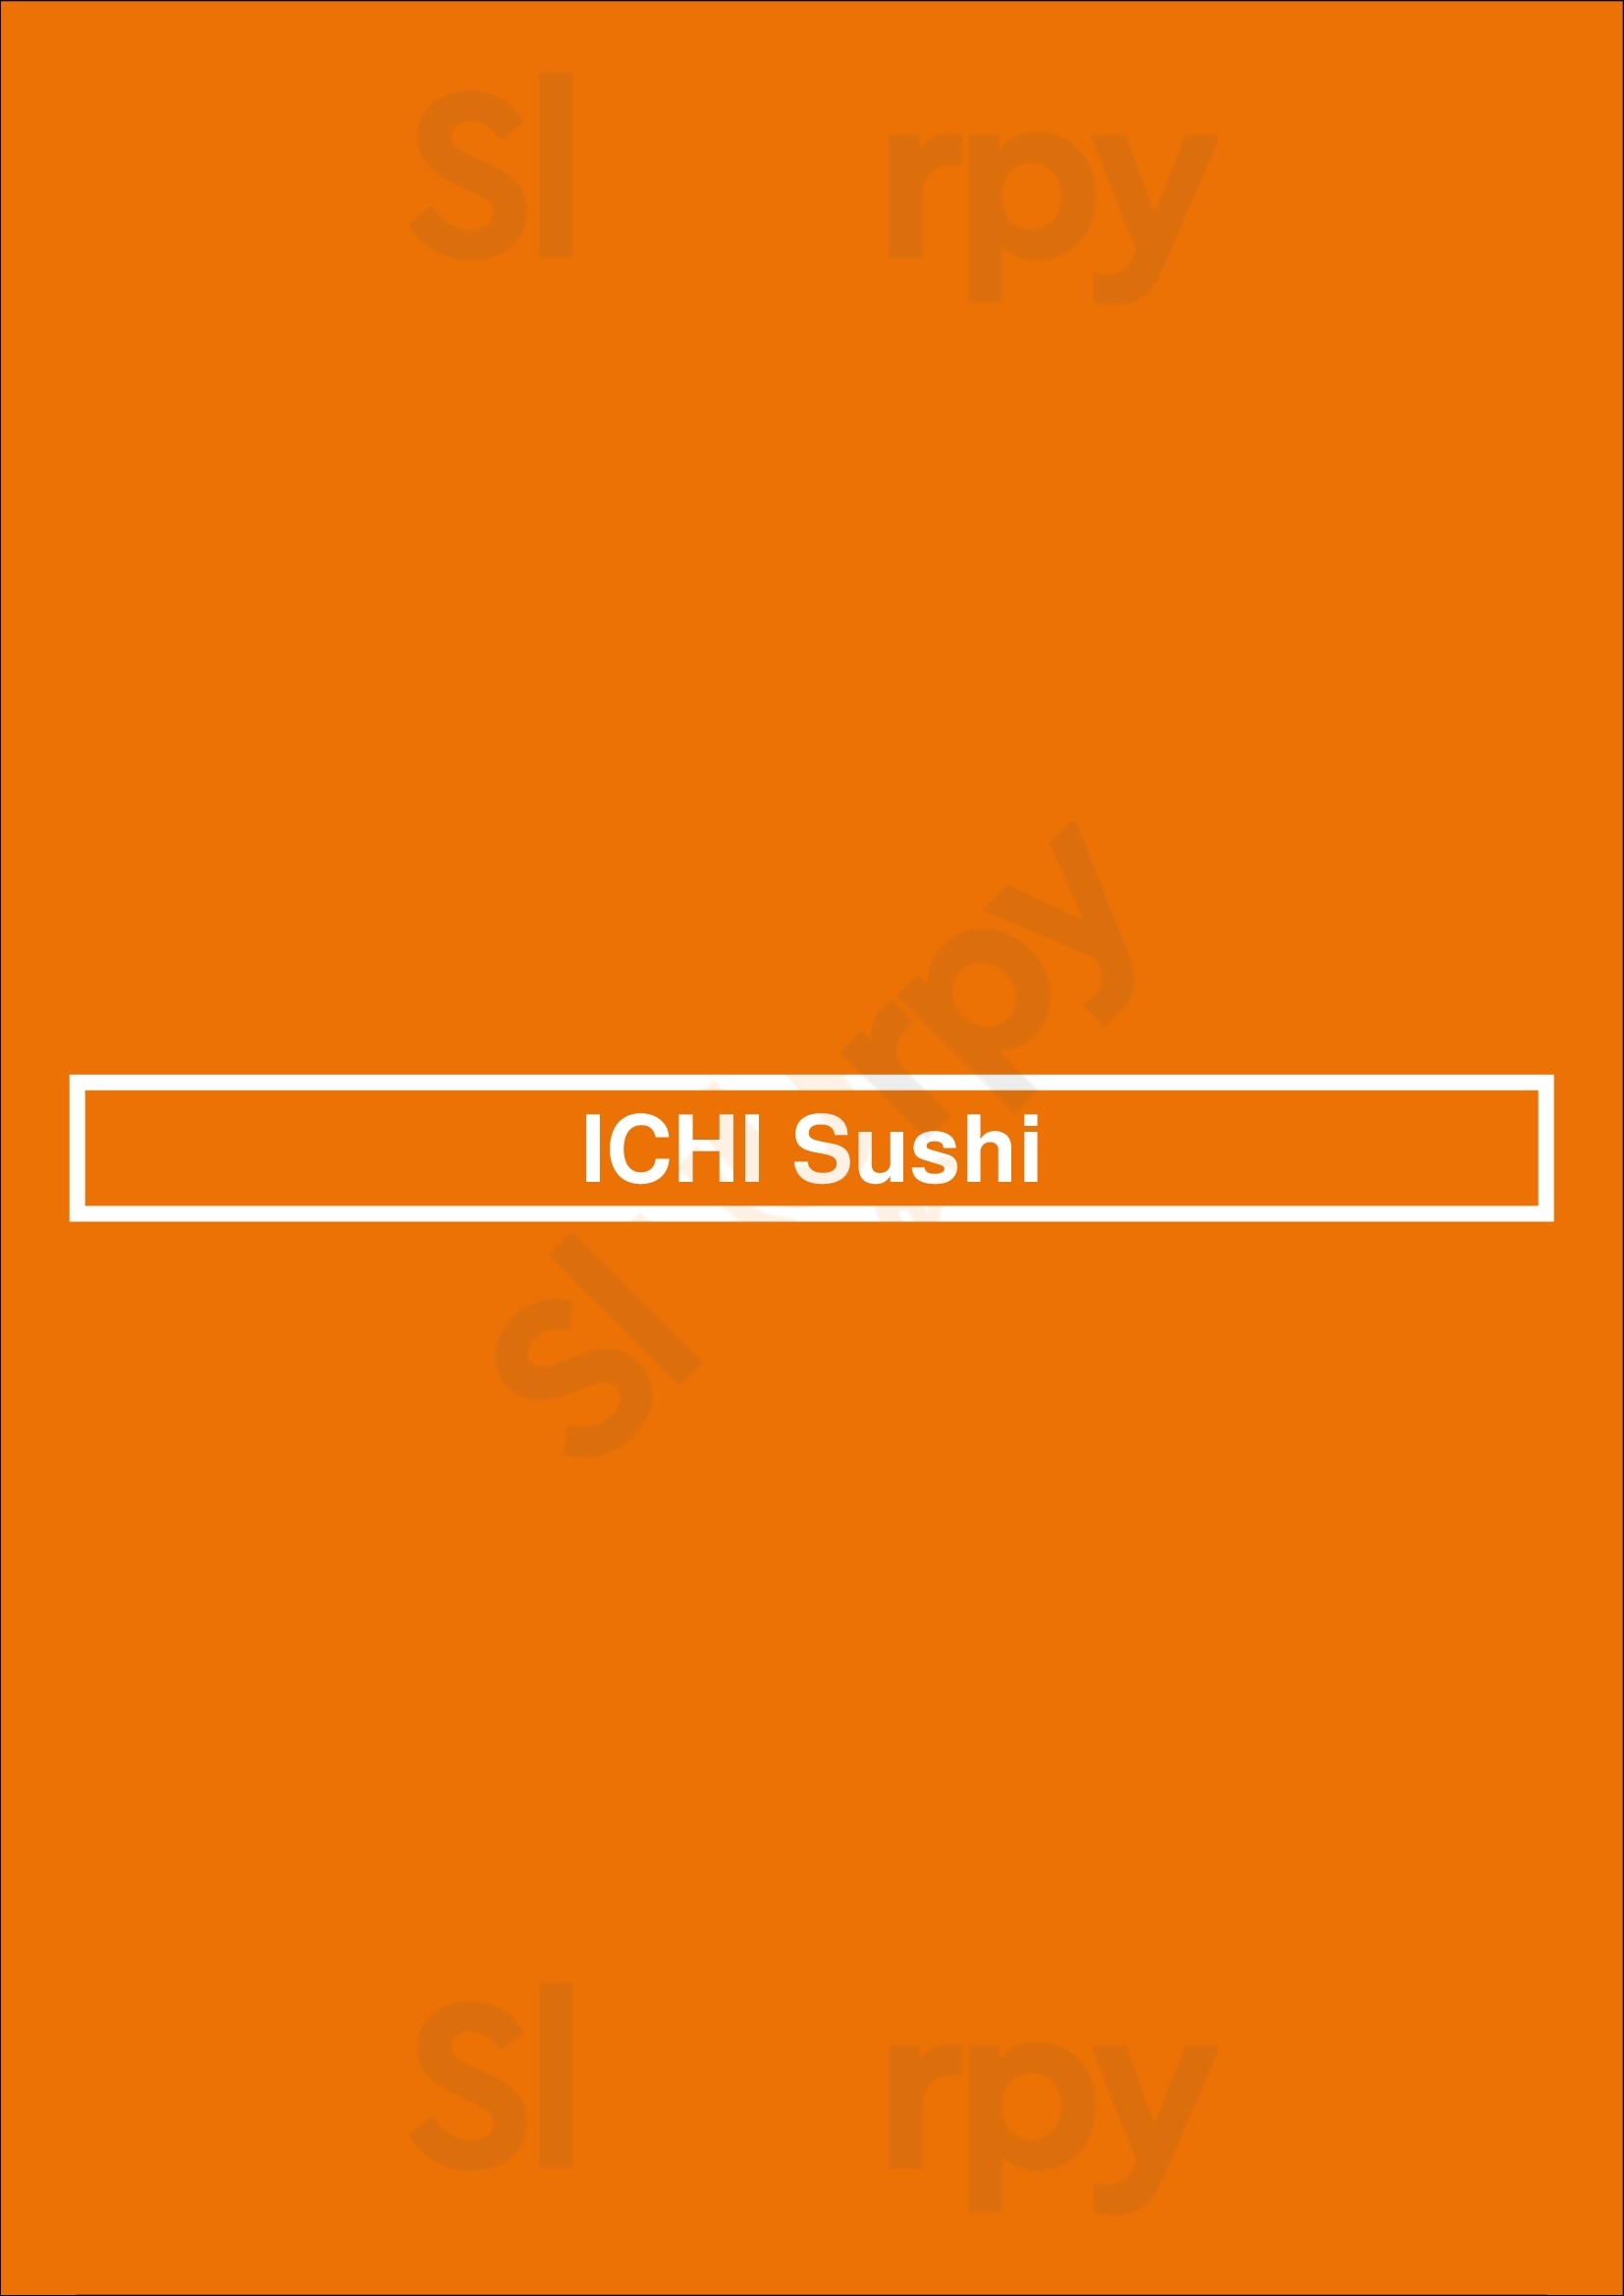 Ichi Sushi San Francisco Menu - 1